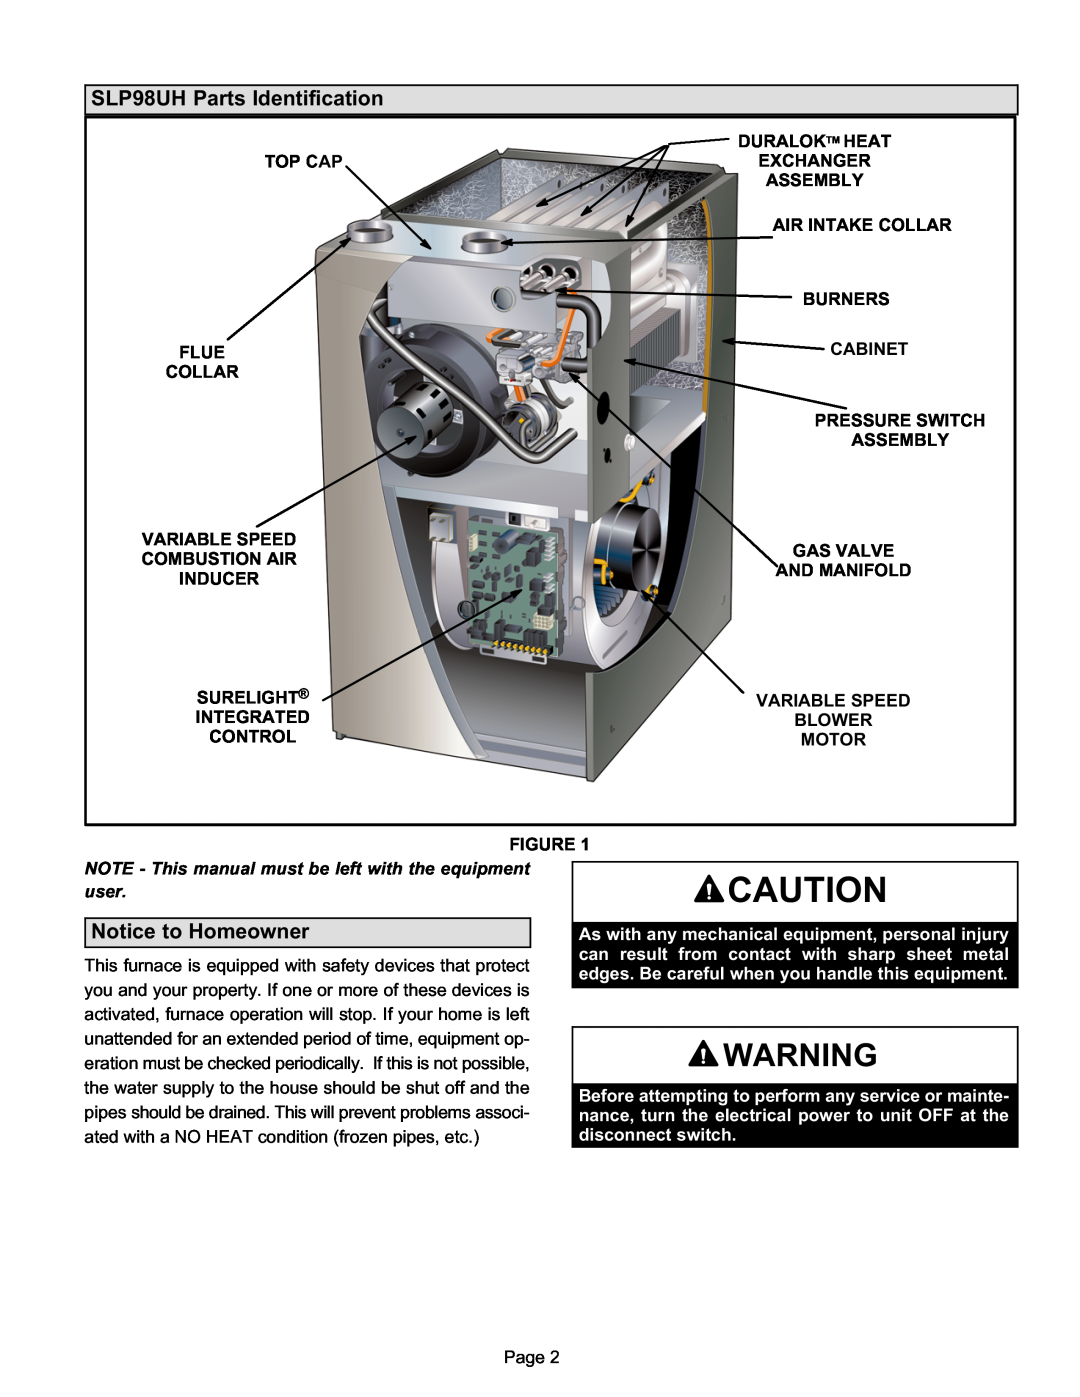 Lennox International Inc slp98uh, cariable capacity gas furnace manual SLP98UH Parts Identification, Notice to Homeowner 